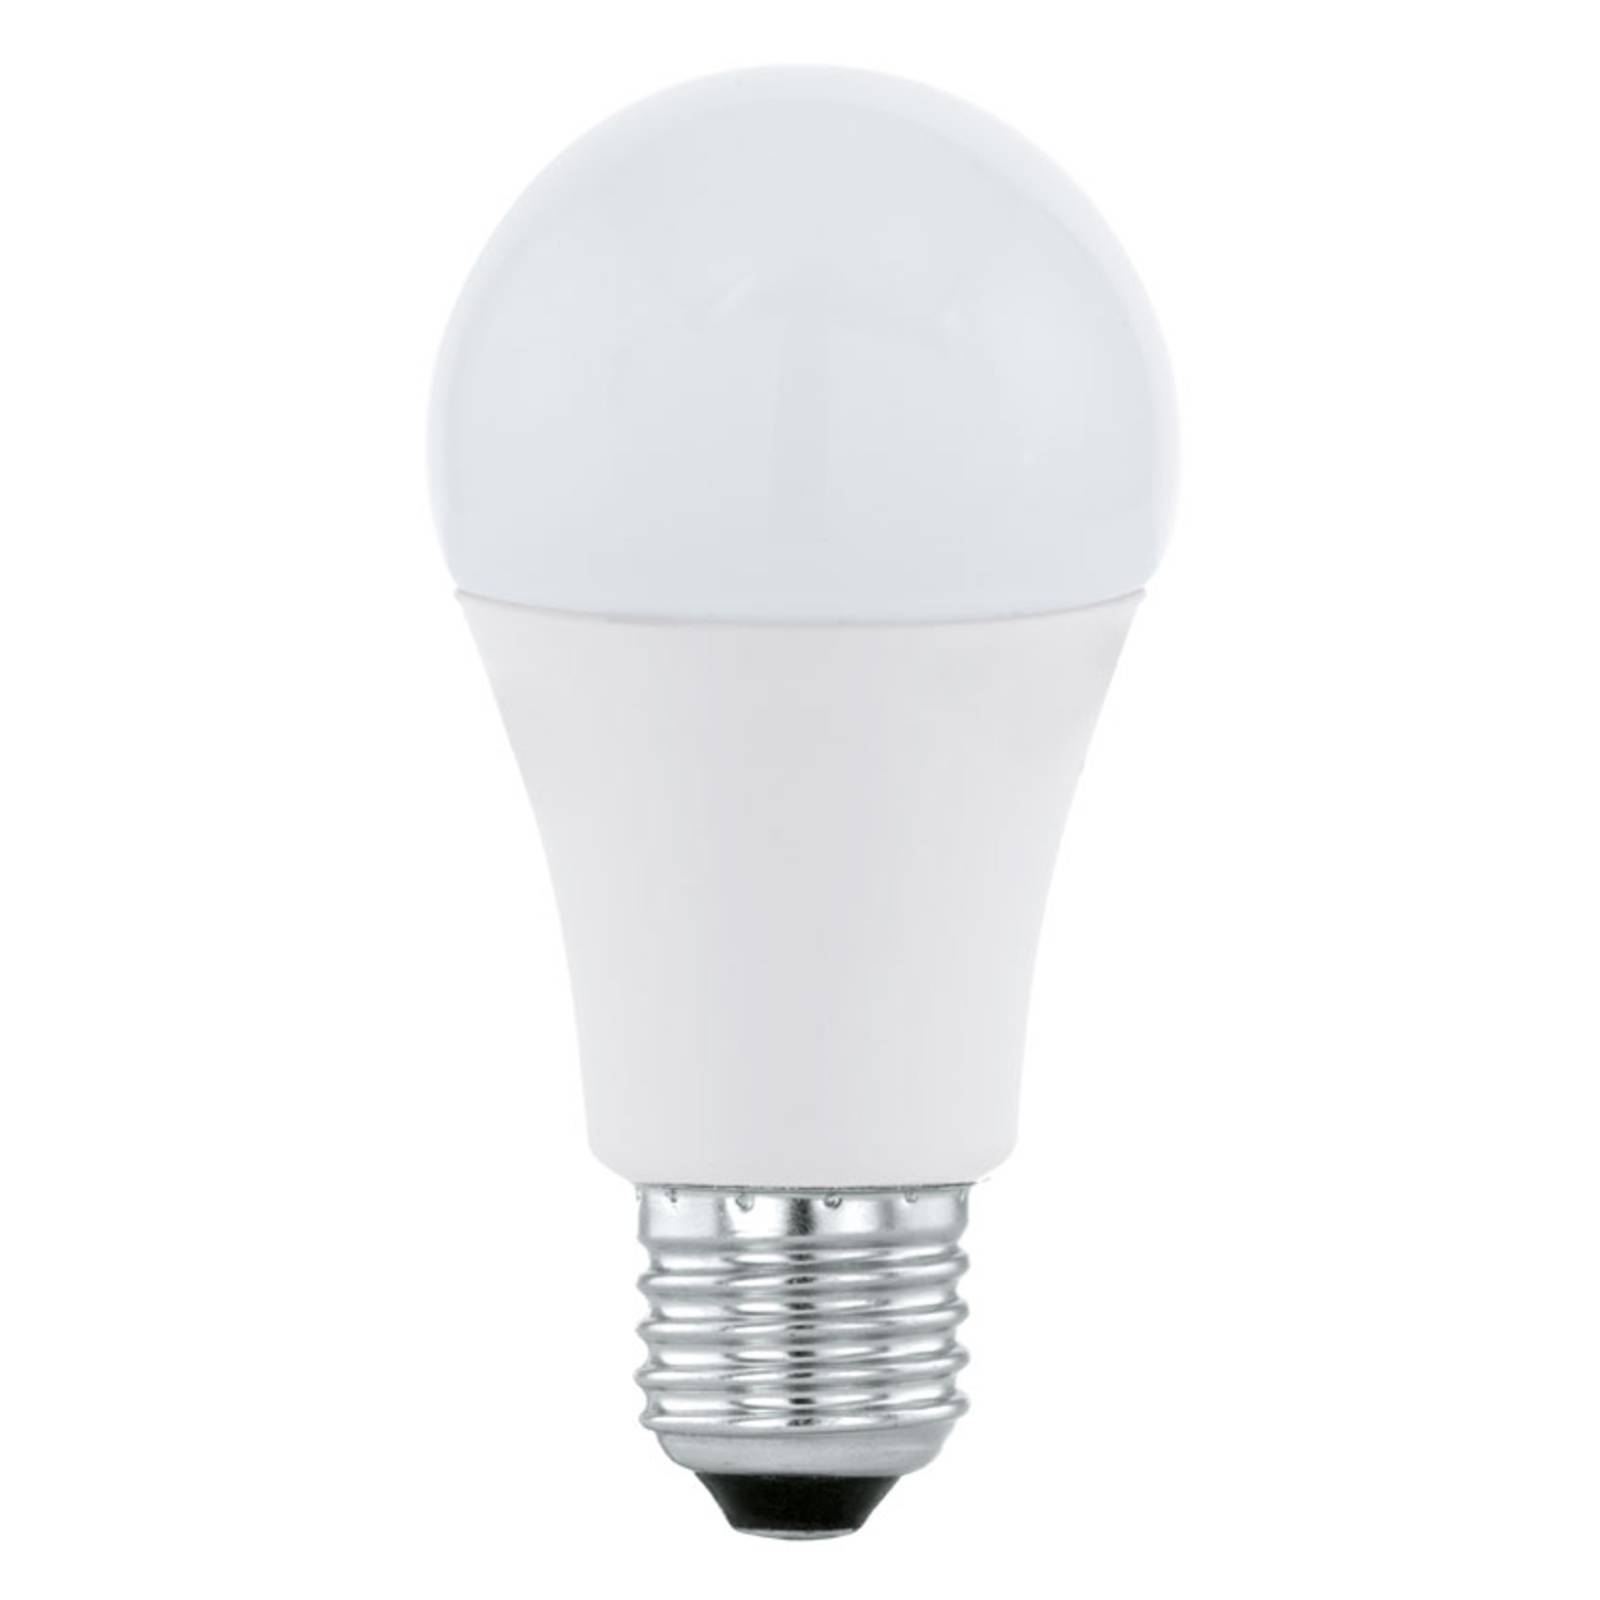 EGLO LED-Lampe E27 A60 11W, warmweiß, opal